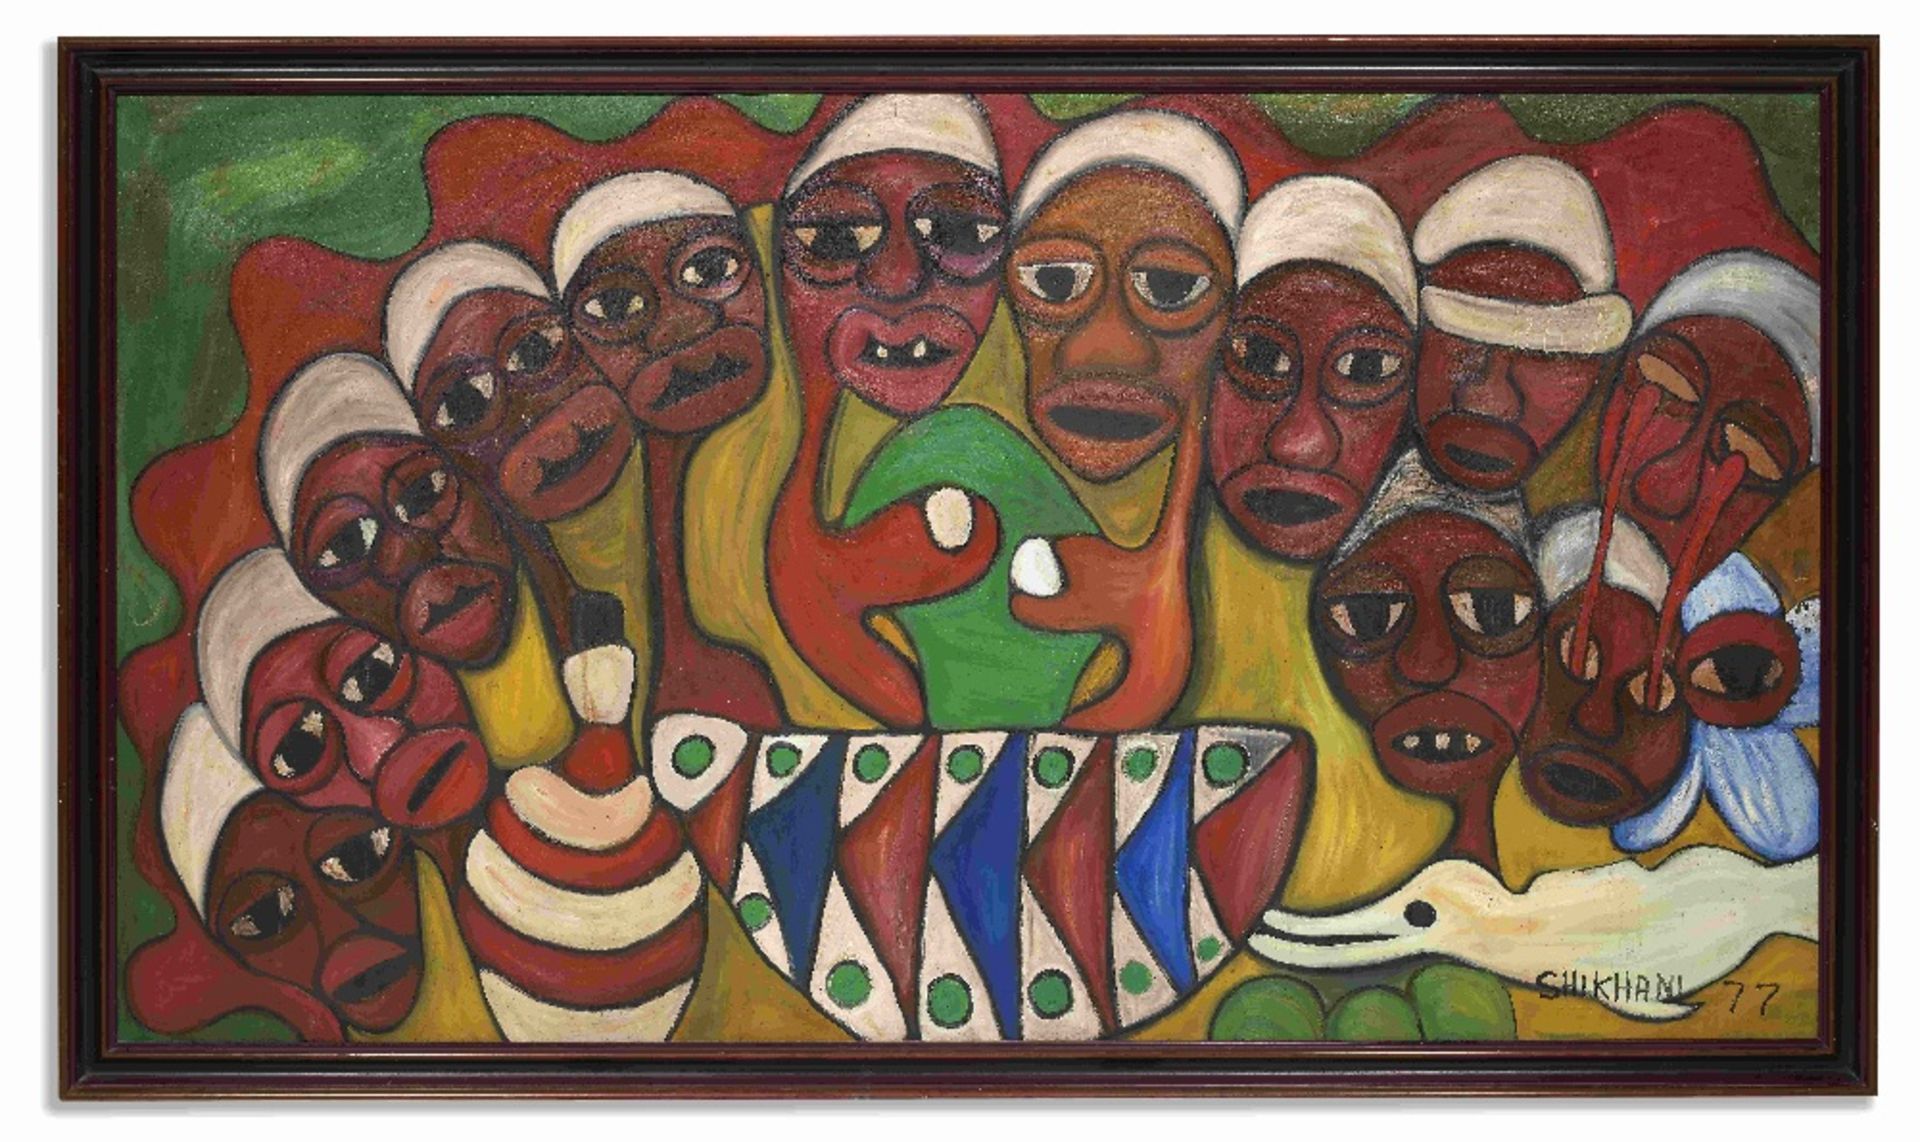 Ernesto Shikhani (Mozambique, 1934-2010) The Last Supper, 1977 - Image 2 of 3